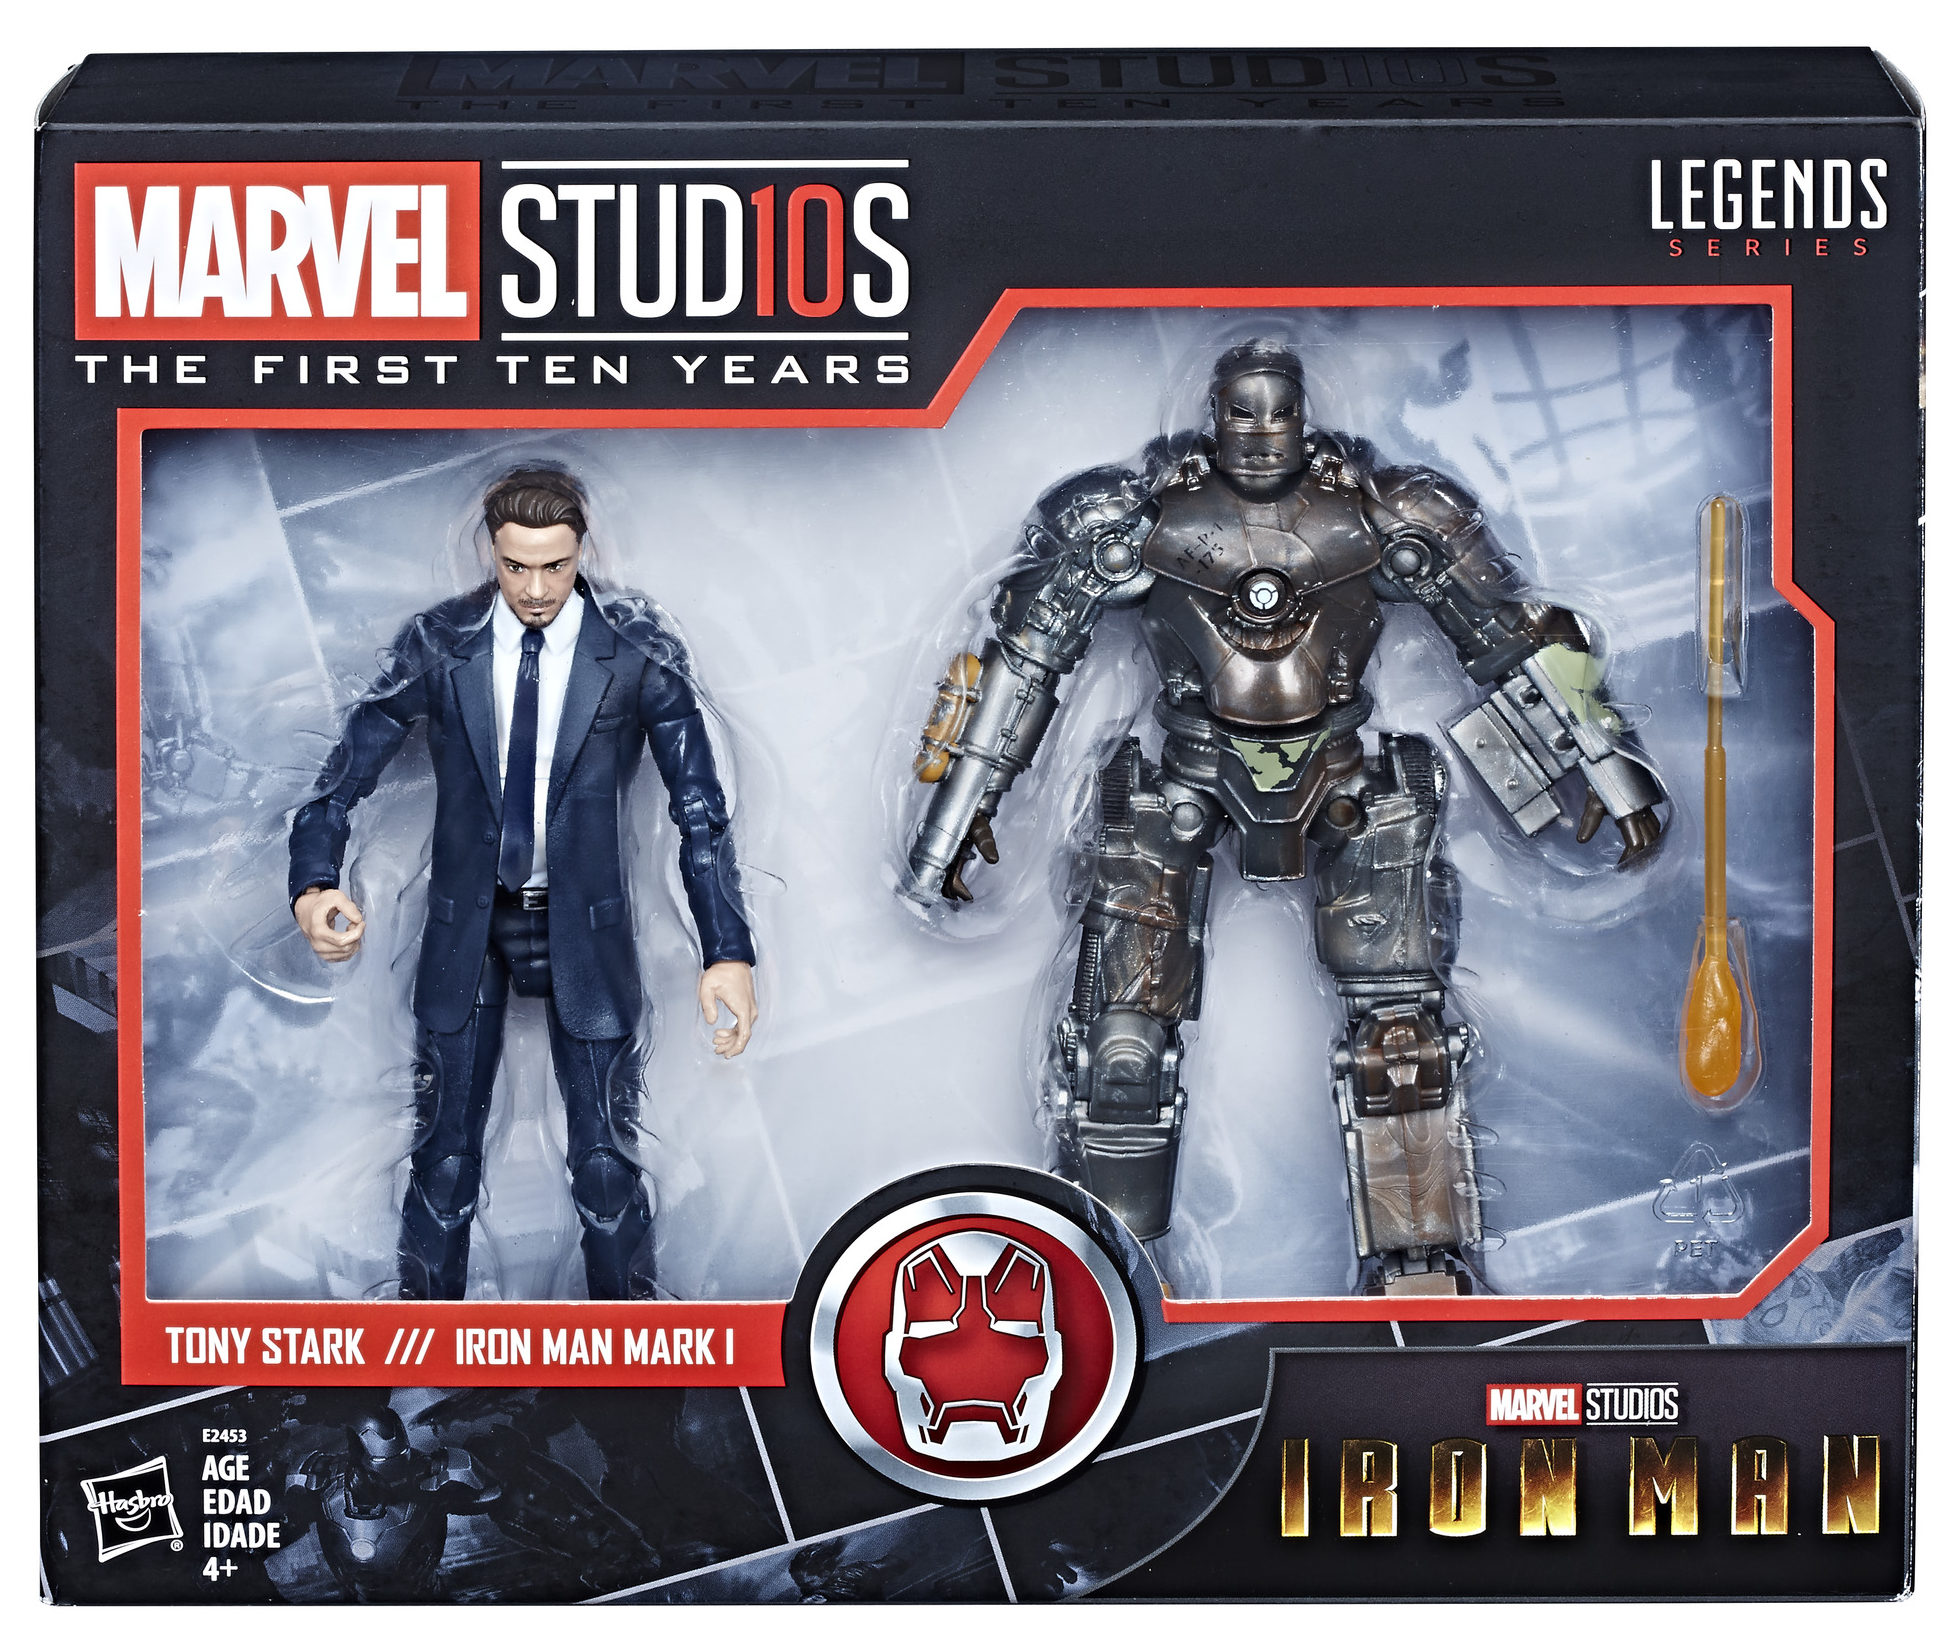 Marvel Studios Legends Tony Stark & Iron Man Mark 1 Up for Order ... - Marvel StuDios LegenDs Tony Stark Iron Man Mark I Set E1536001005822